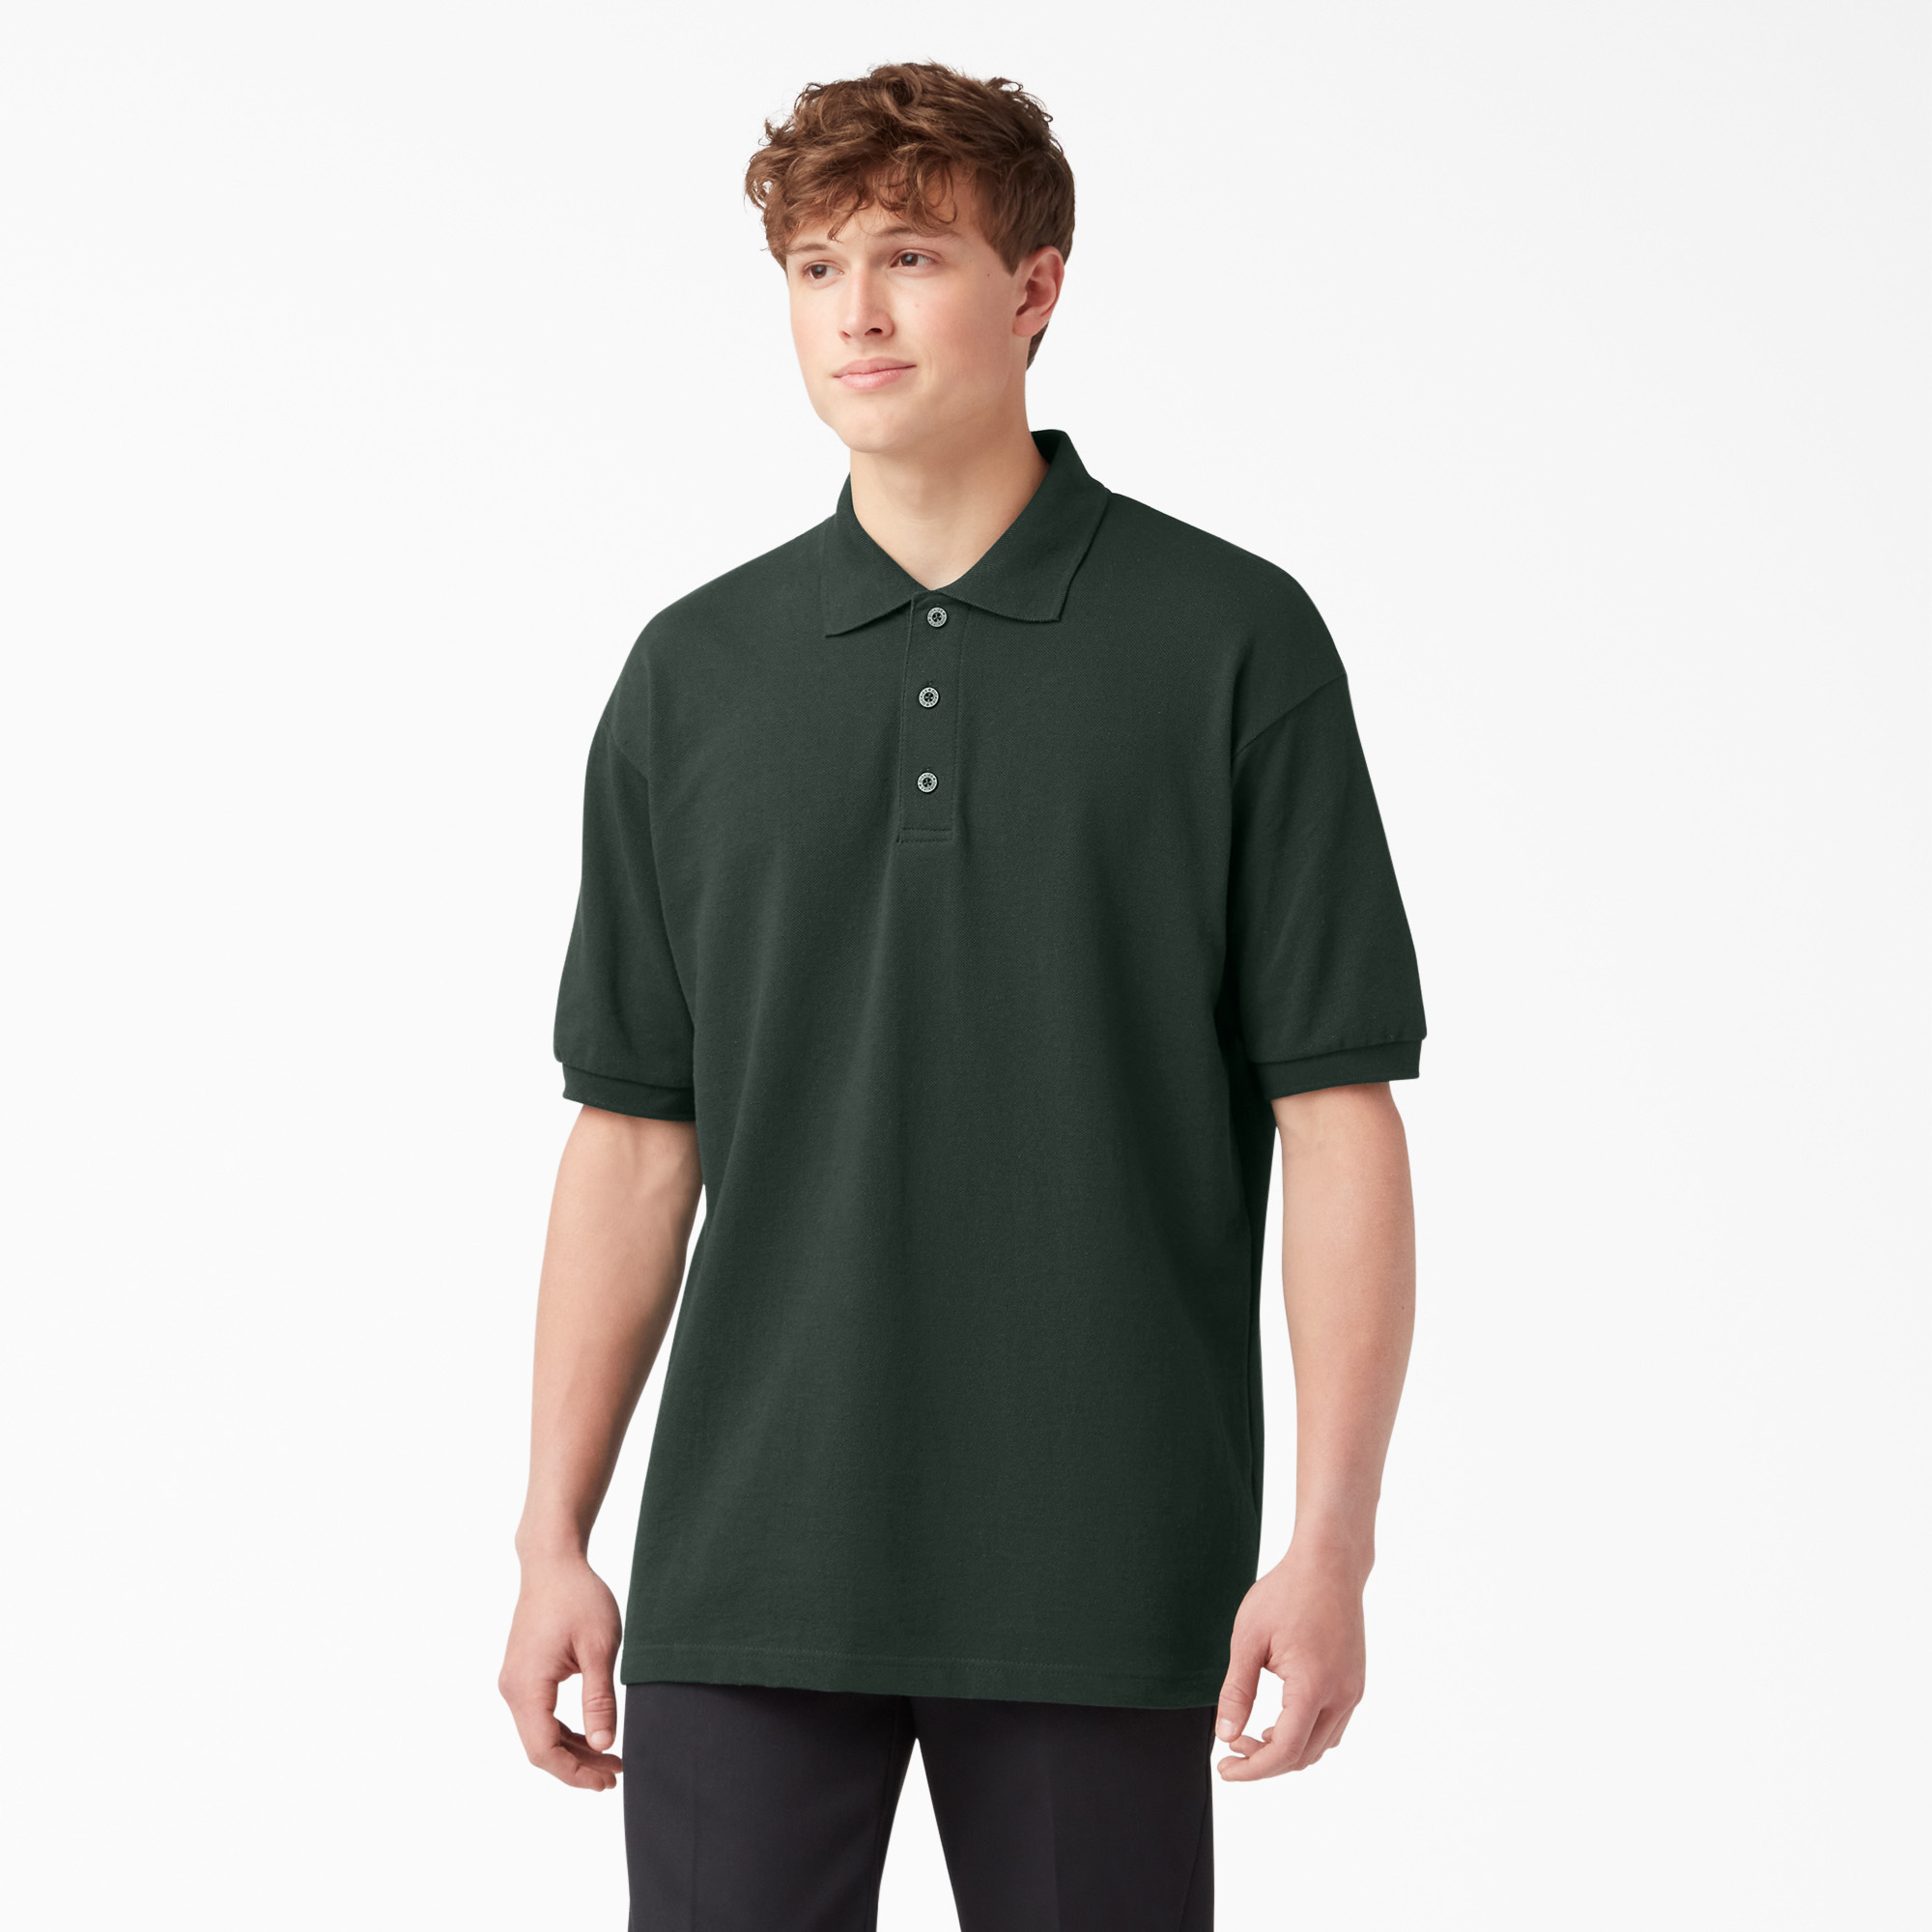 Adult Sized Short Sleeve Pique Polo Shirt - Hunter Green (GH)